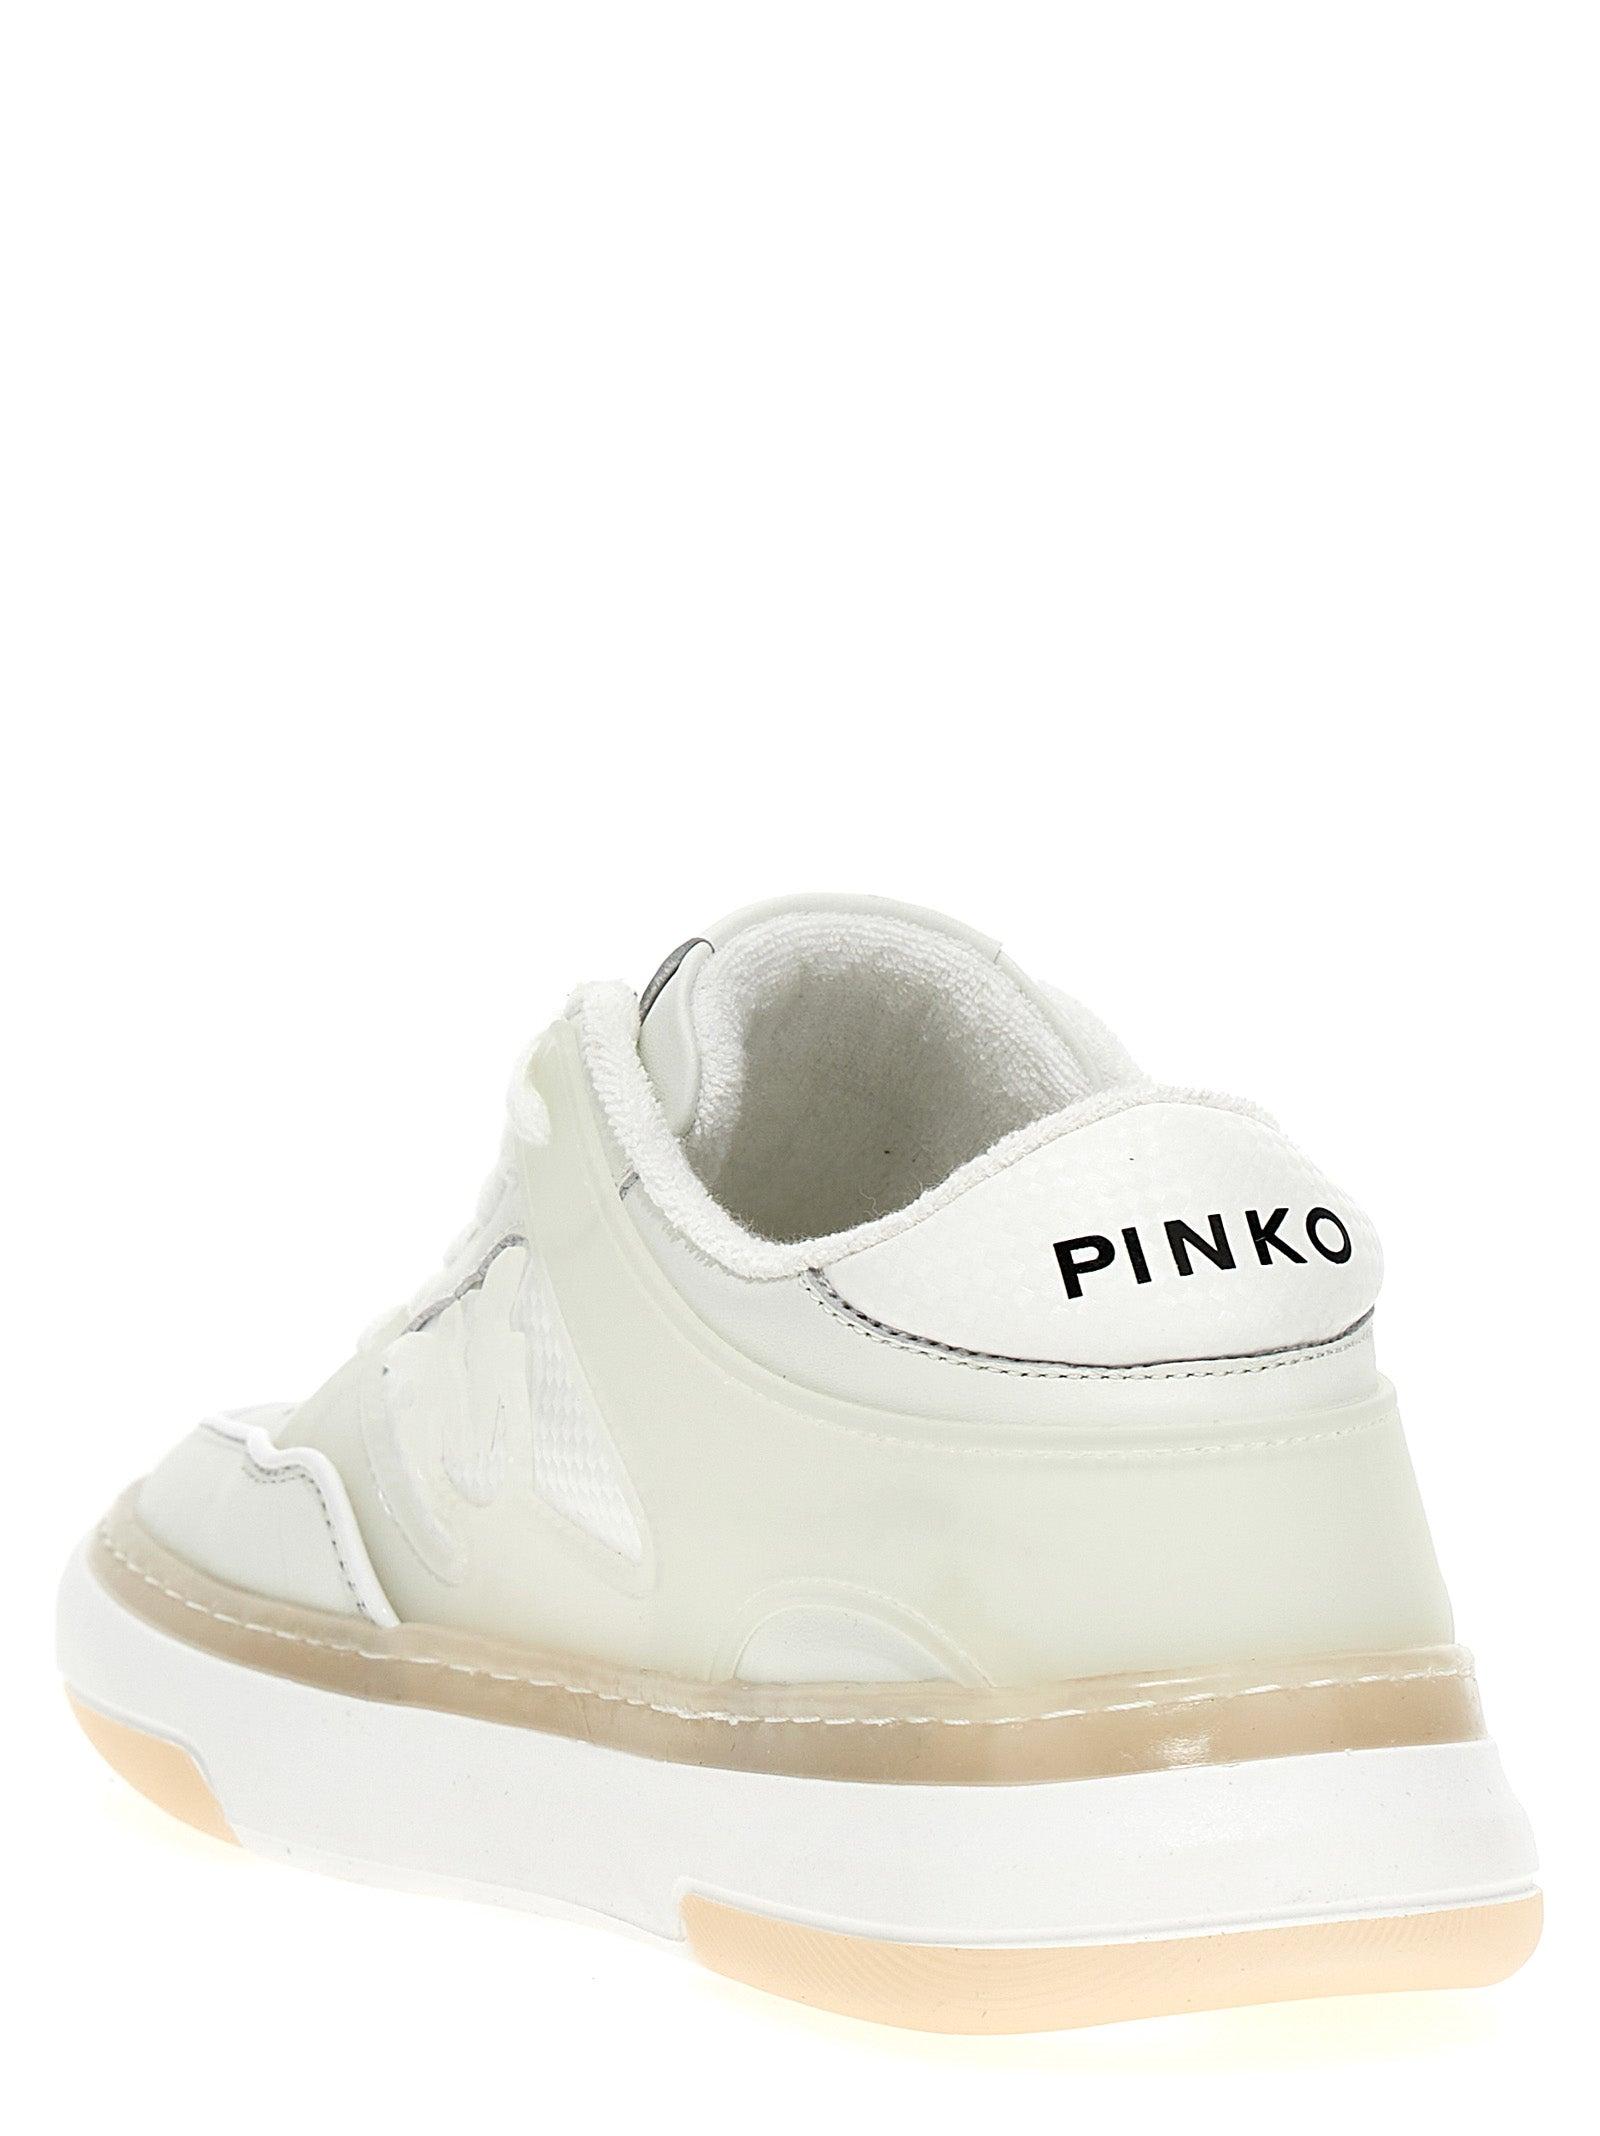 Pinko Aori Ginette Sneakers in White | Lyst